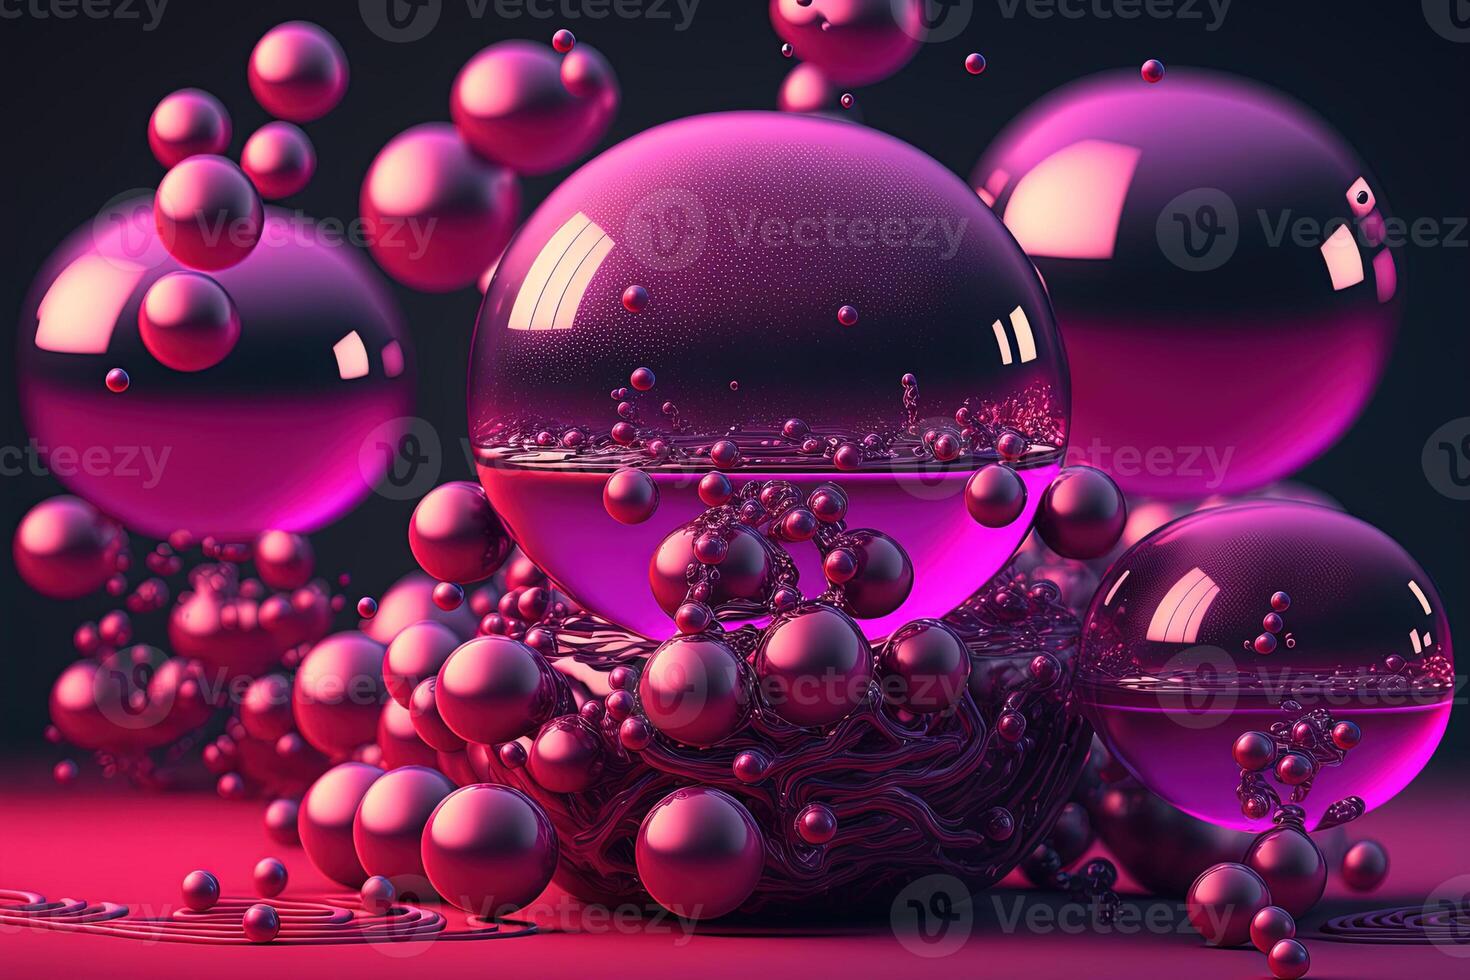 generatief ai, vier groot bollen en weinig kralen, ballen in magenta kleur. glanzend roze vloeistof banier, 3d tafereel effect, modern macro fotorealistisch abstract achtergrond illustratie. foto